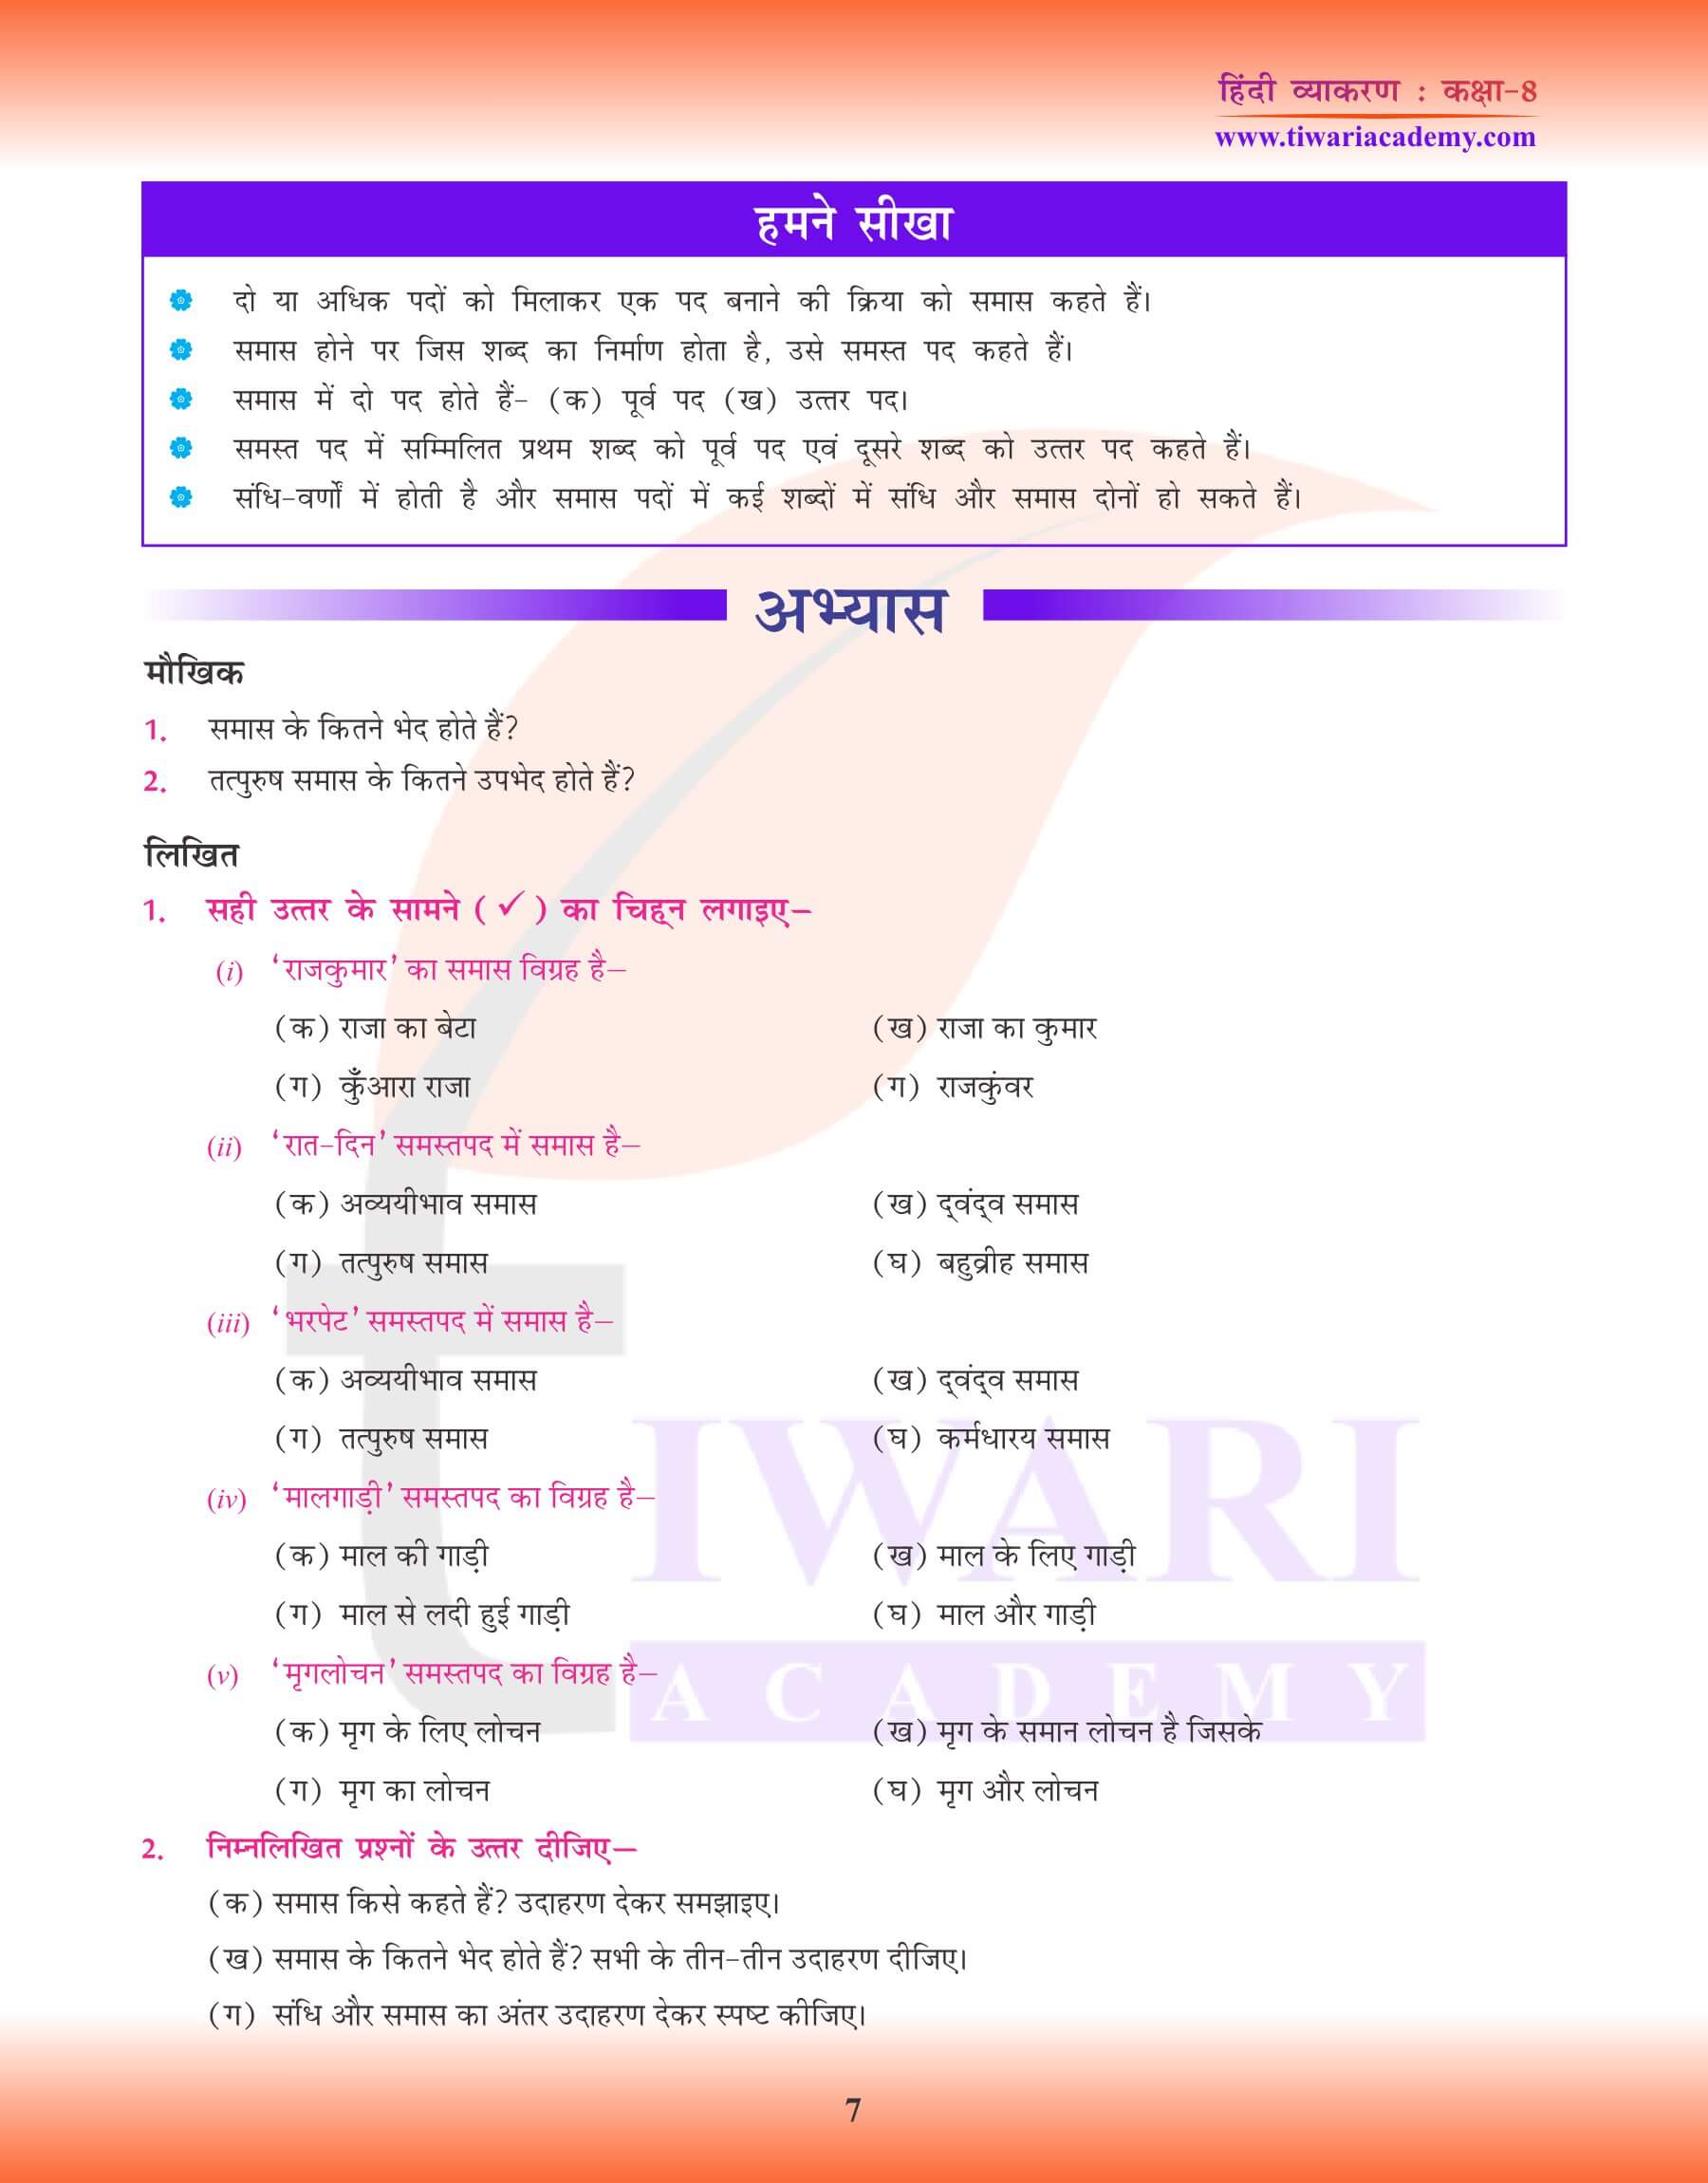 कक्षा 8 हिंदी व्याकरण समास के लिए अभ्यास पुस्तिका